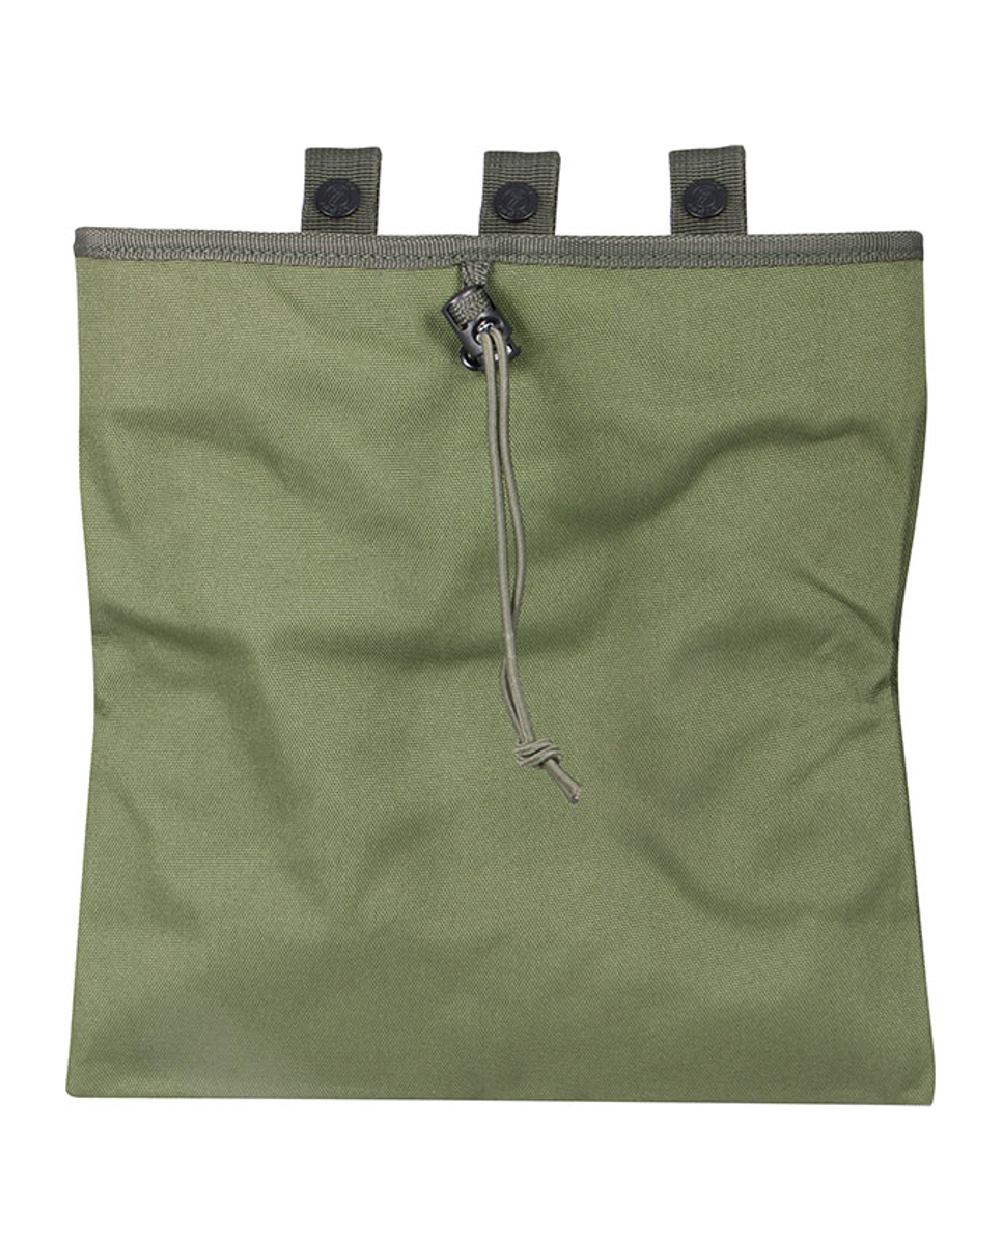 Viper Folding Dump Bag in Green 